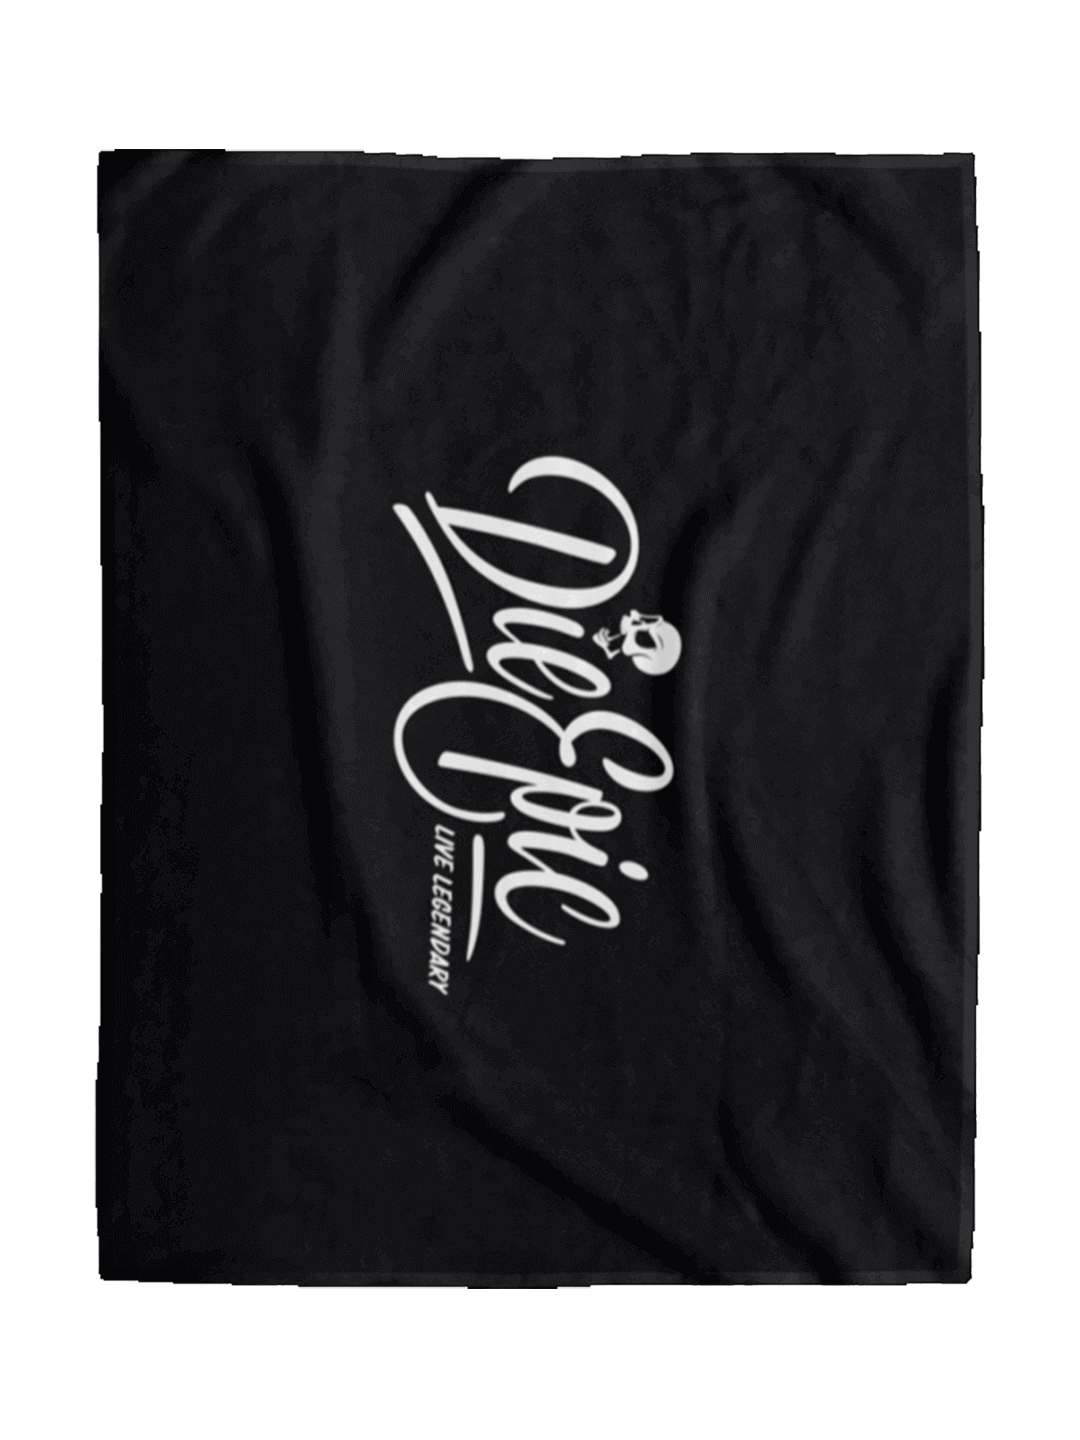 Black DieEpic Cozy Plush Fleece Blanket 60x80